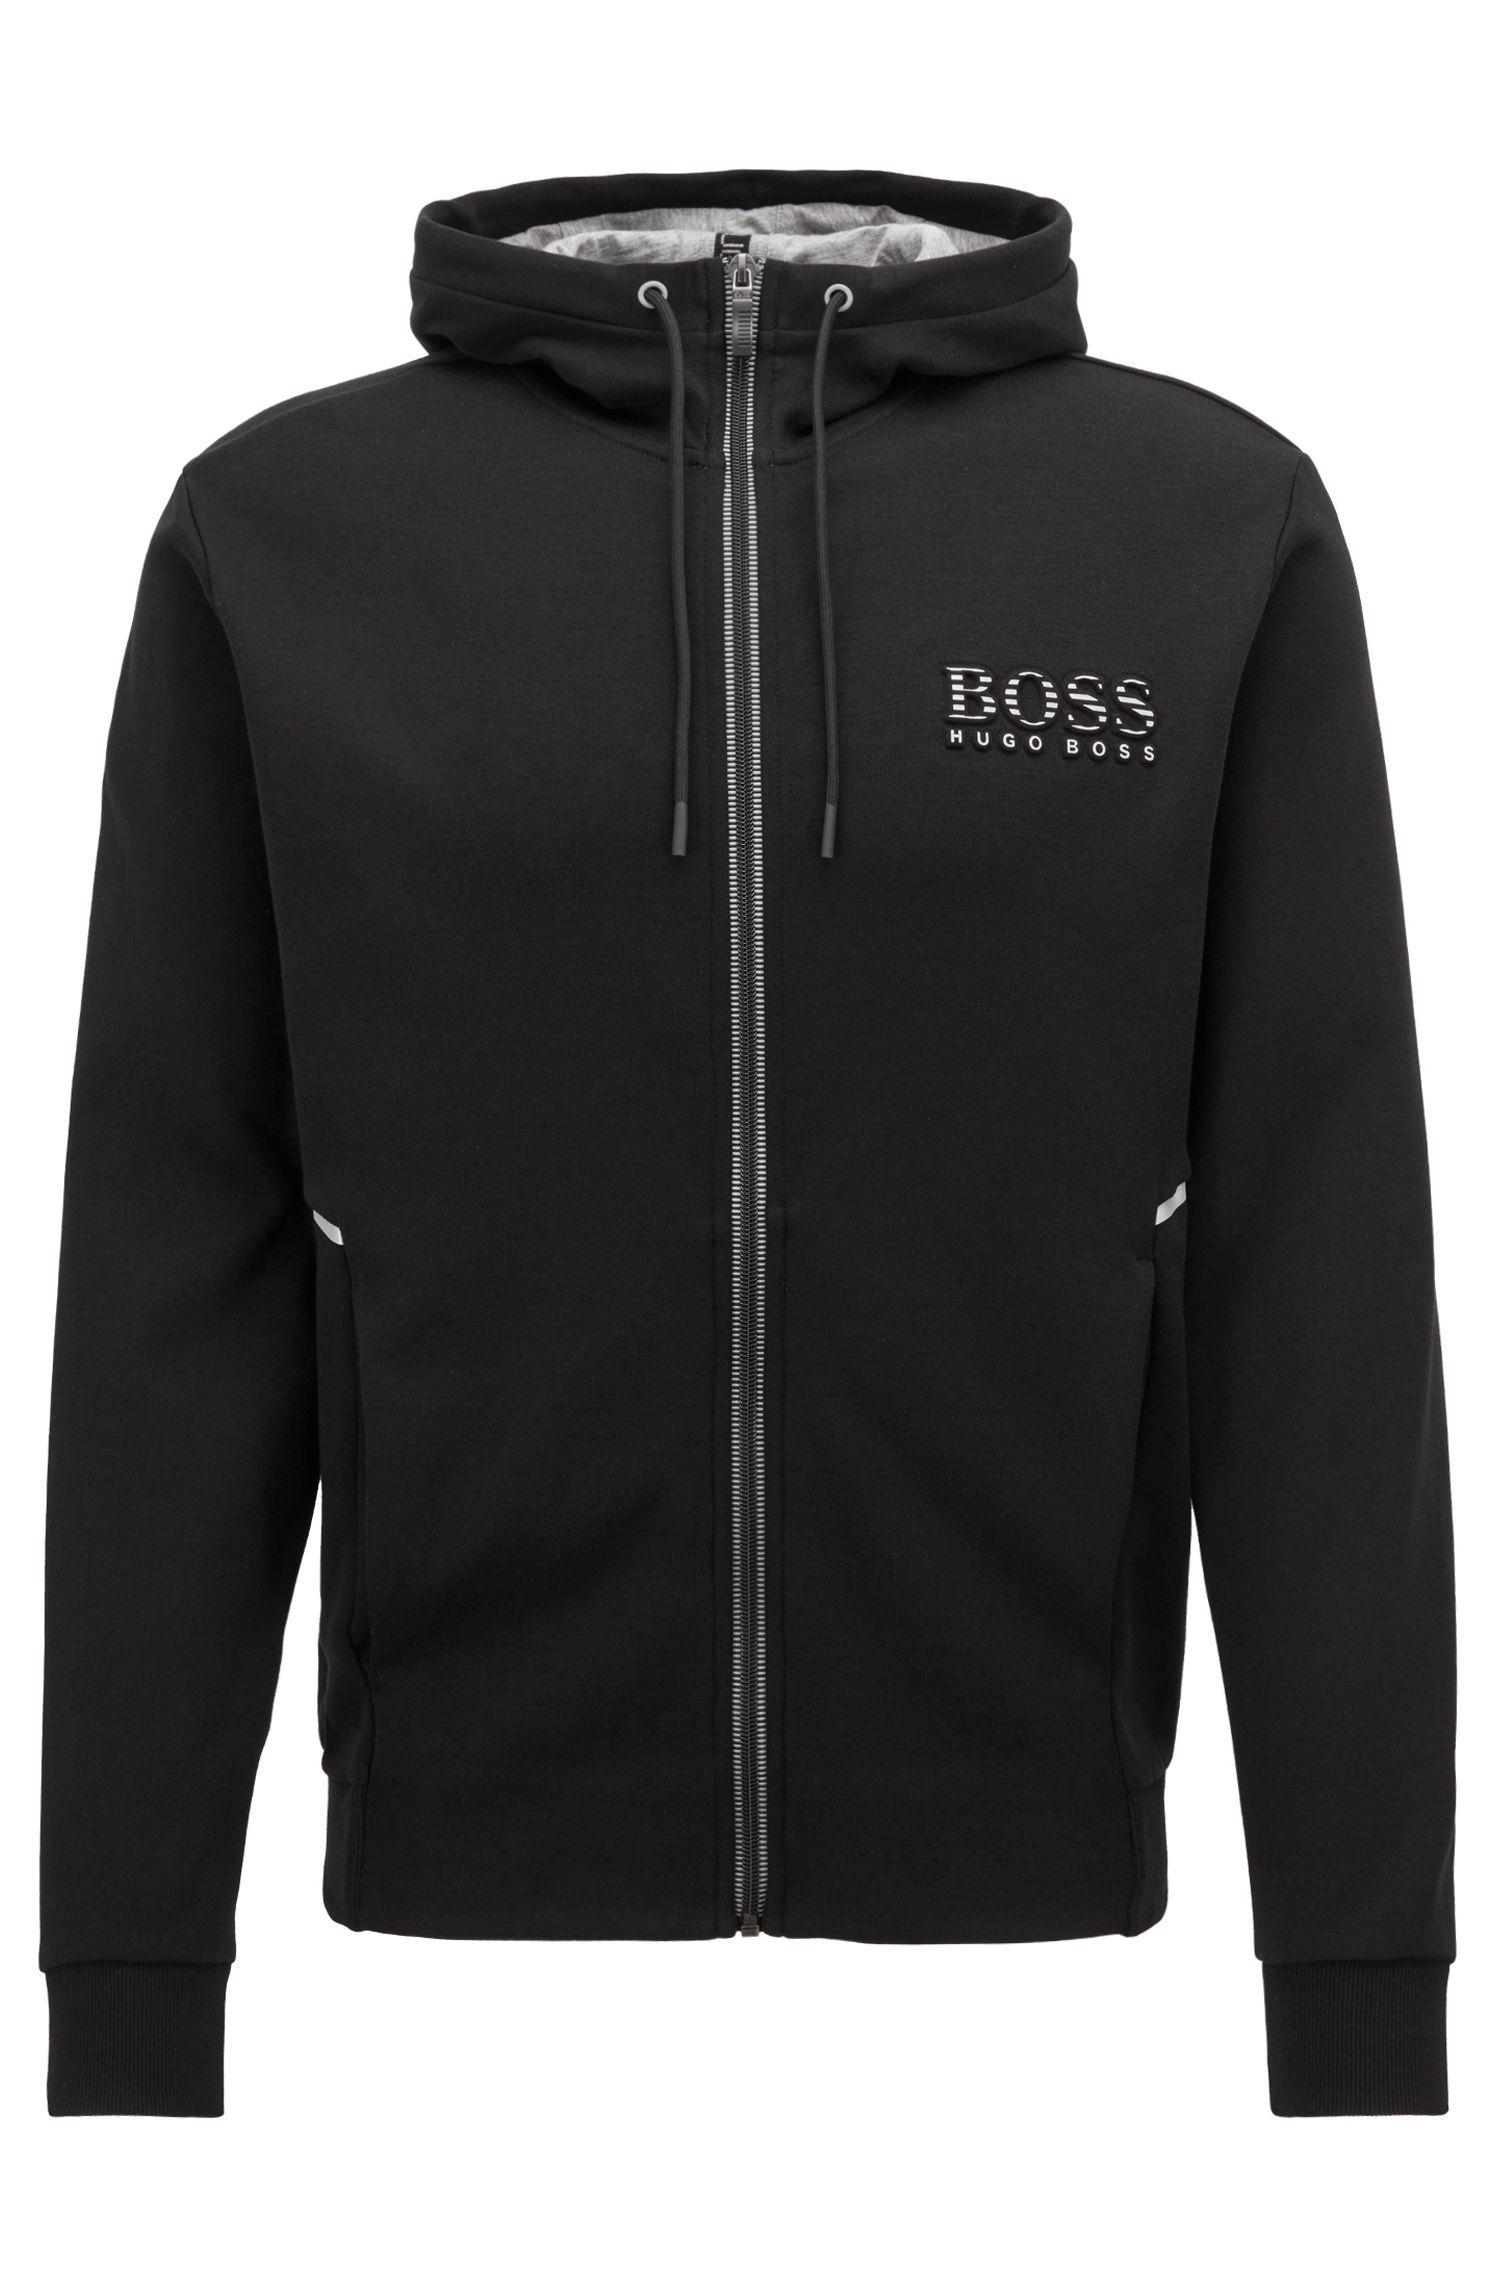 hugo boss hooded sweatshirt with logo and reflective detailing